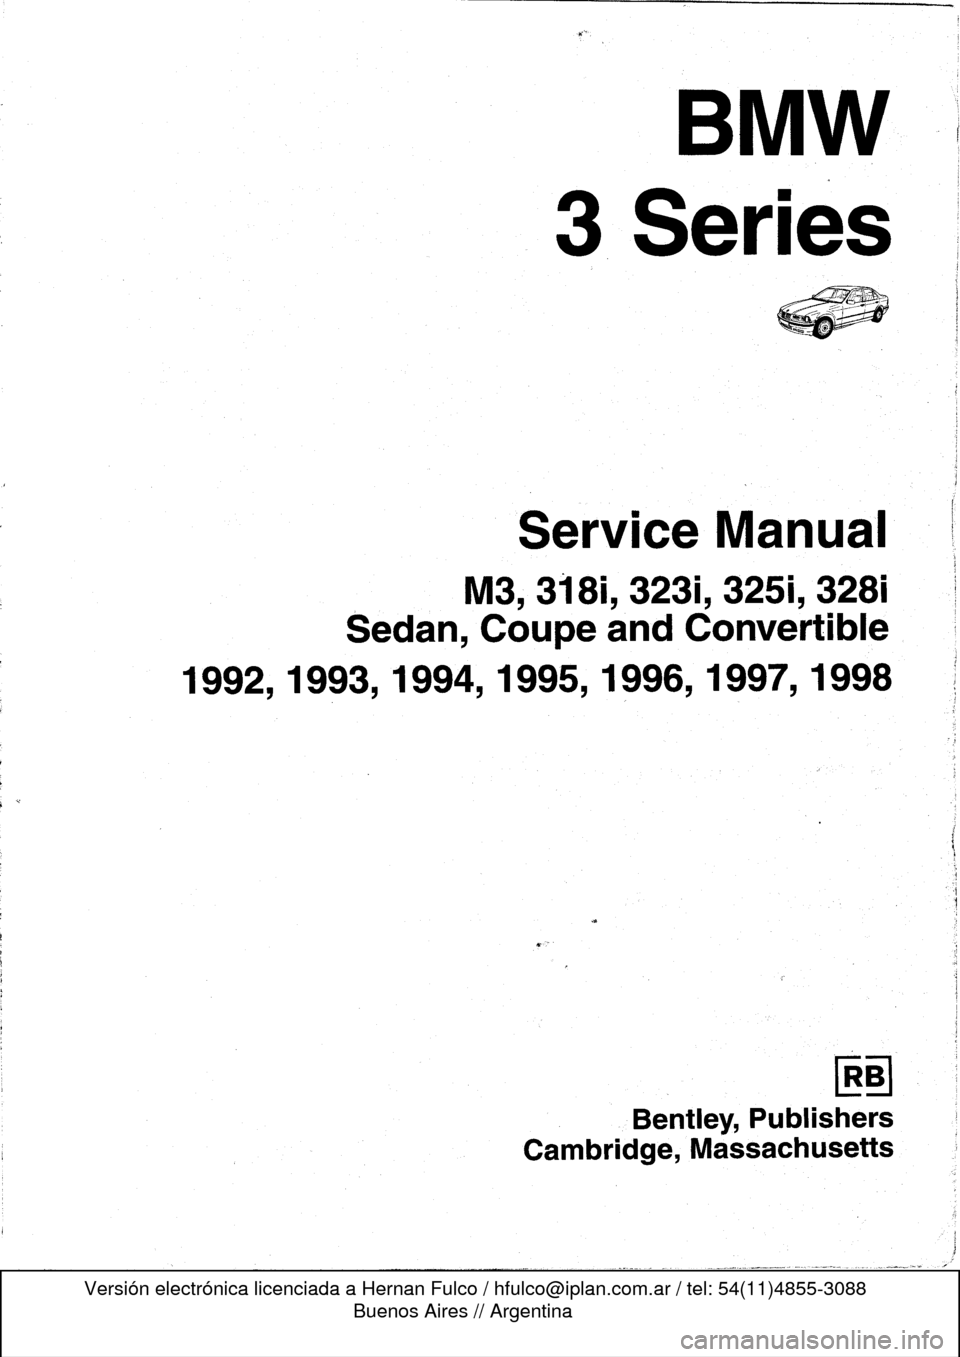 BMW 323i 1996 E36 Workshop Manual 